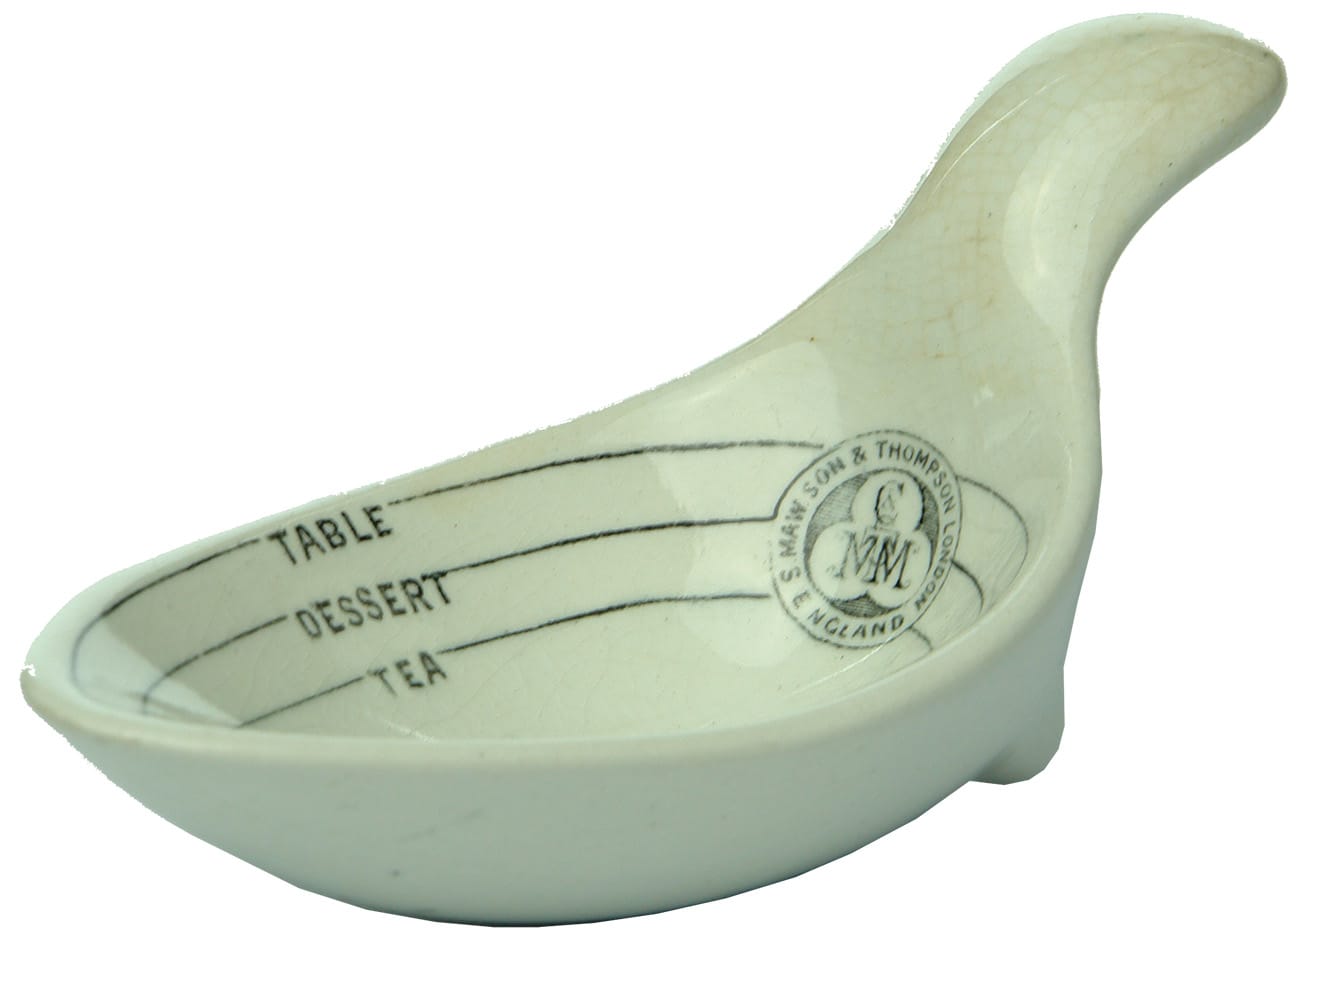 Maw Son Thompson Ceramic Measuring Spoon